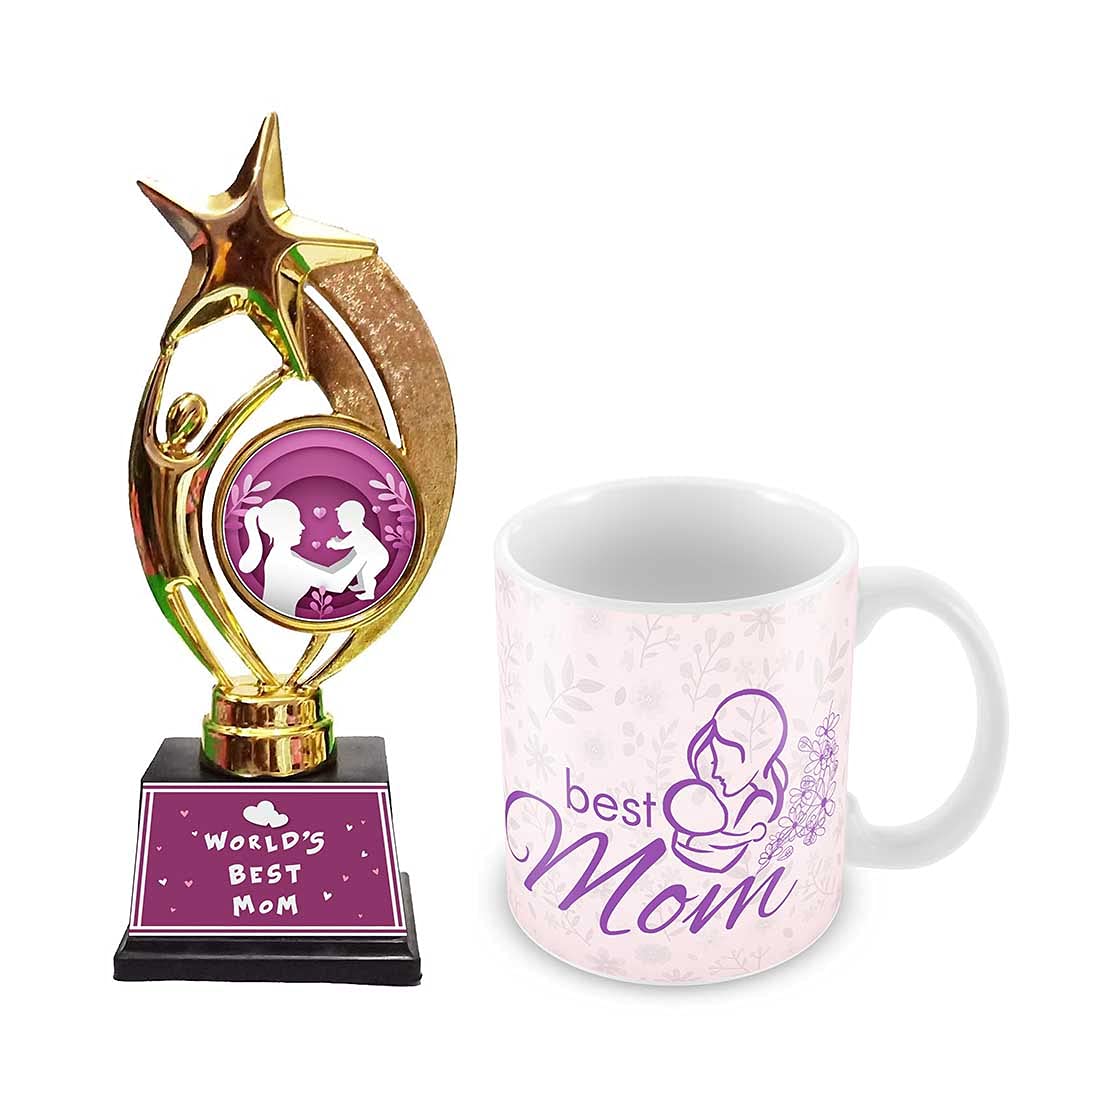 worlds-best-mom-printed-ceramic-coffee-mug-with-trophy